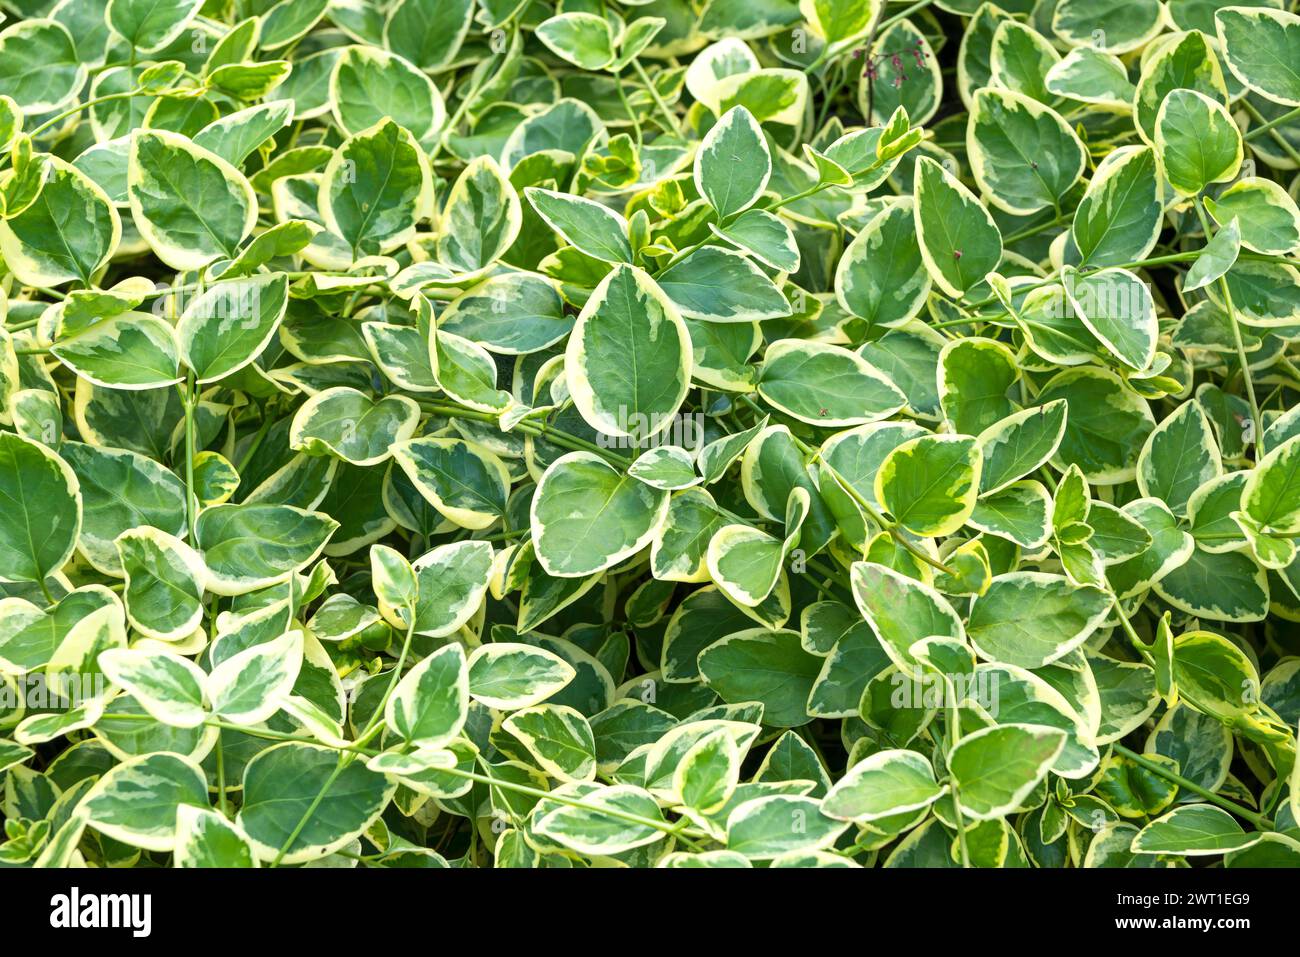 greater periwinkle (Vinca major 'Variegata', Vinca major Variegata), leaves of cultivar Summer Variegata Stock Photo